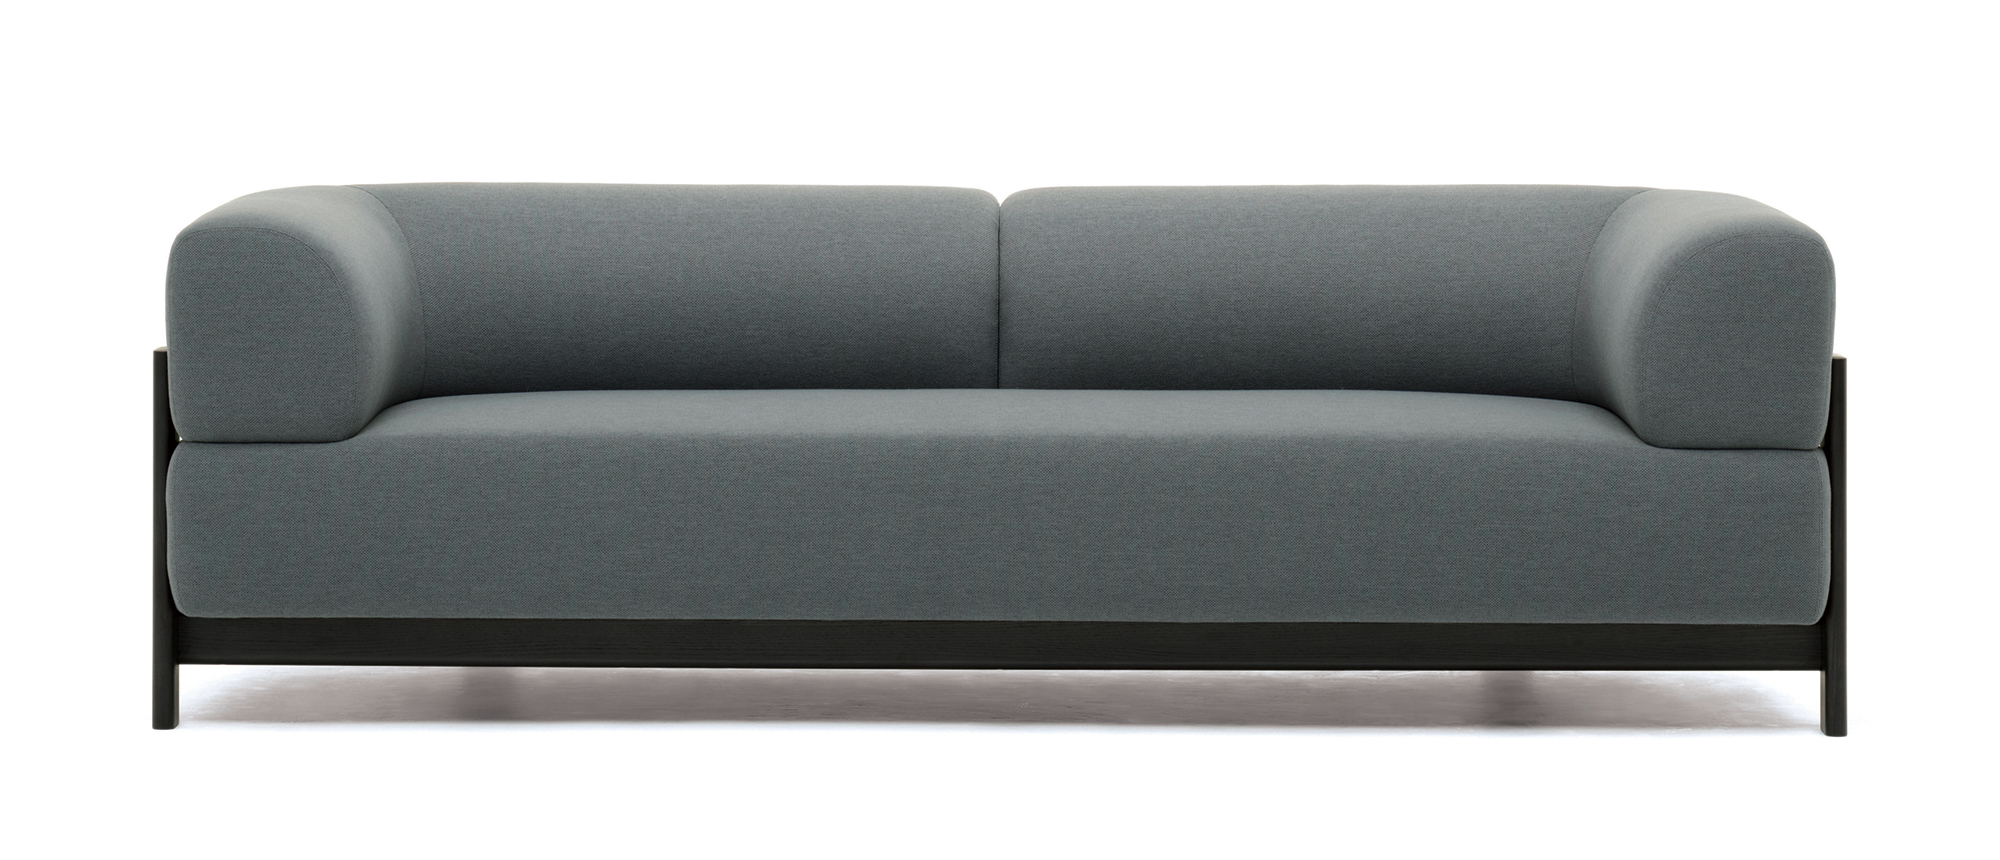 Elephant Sofa 3-Seater - KARIMOKU NEW STANDARD (KNS)